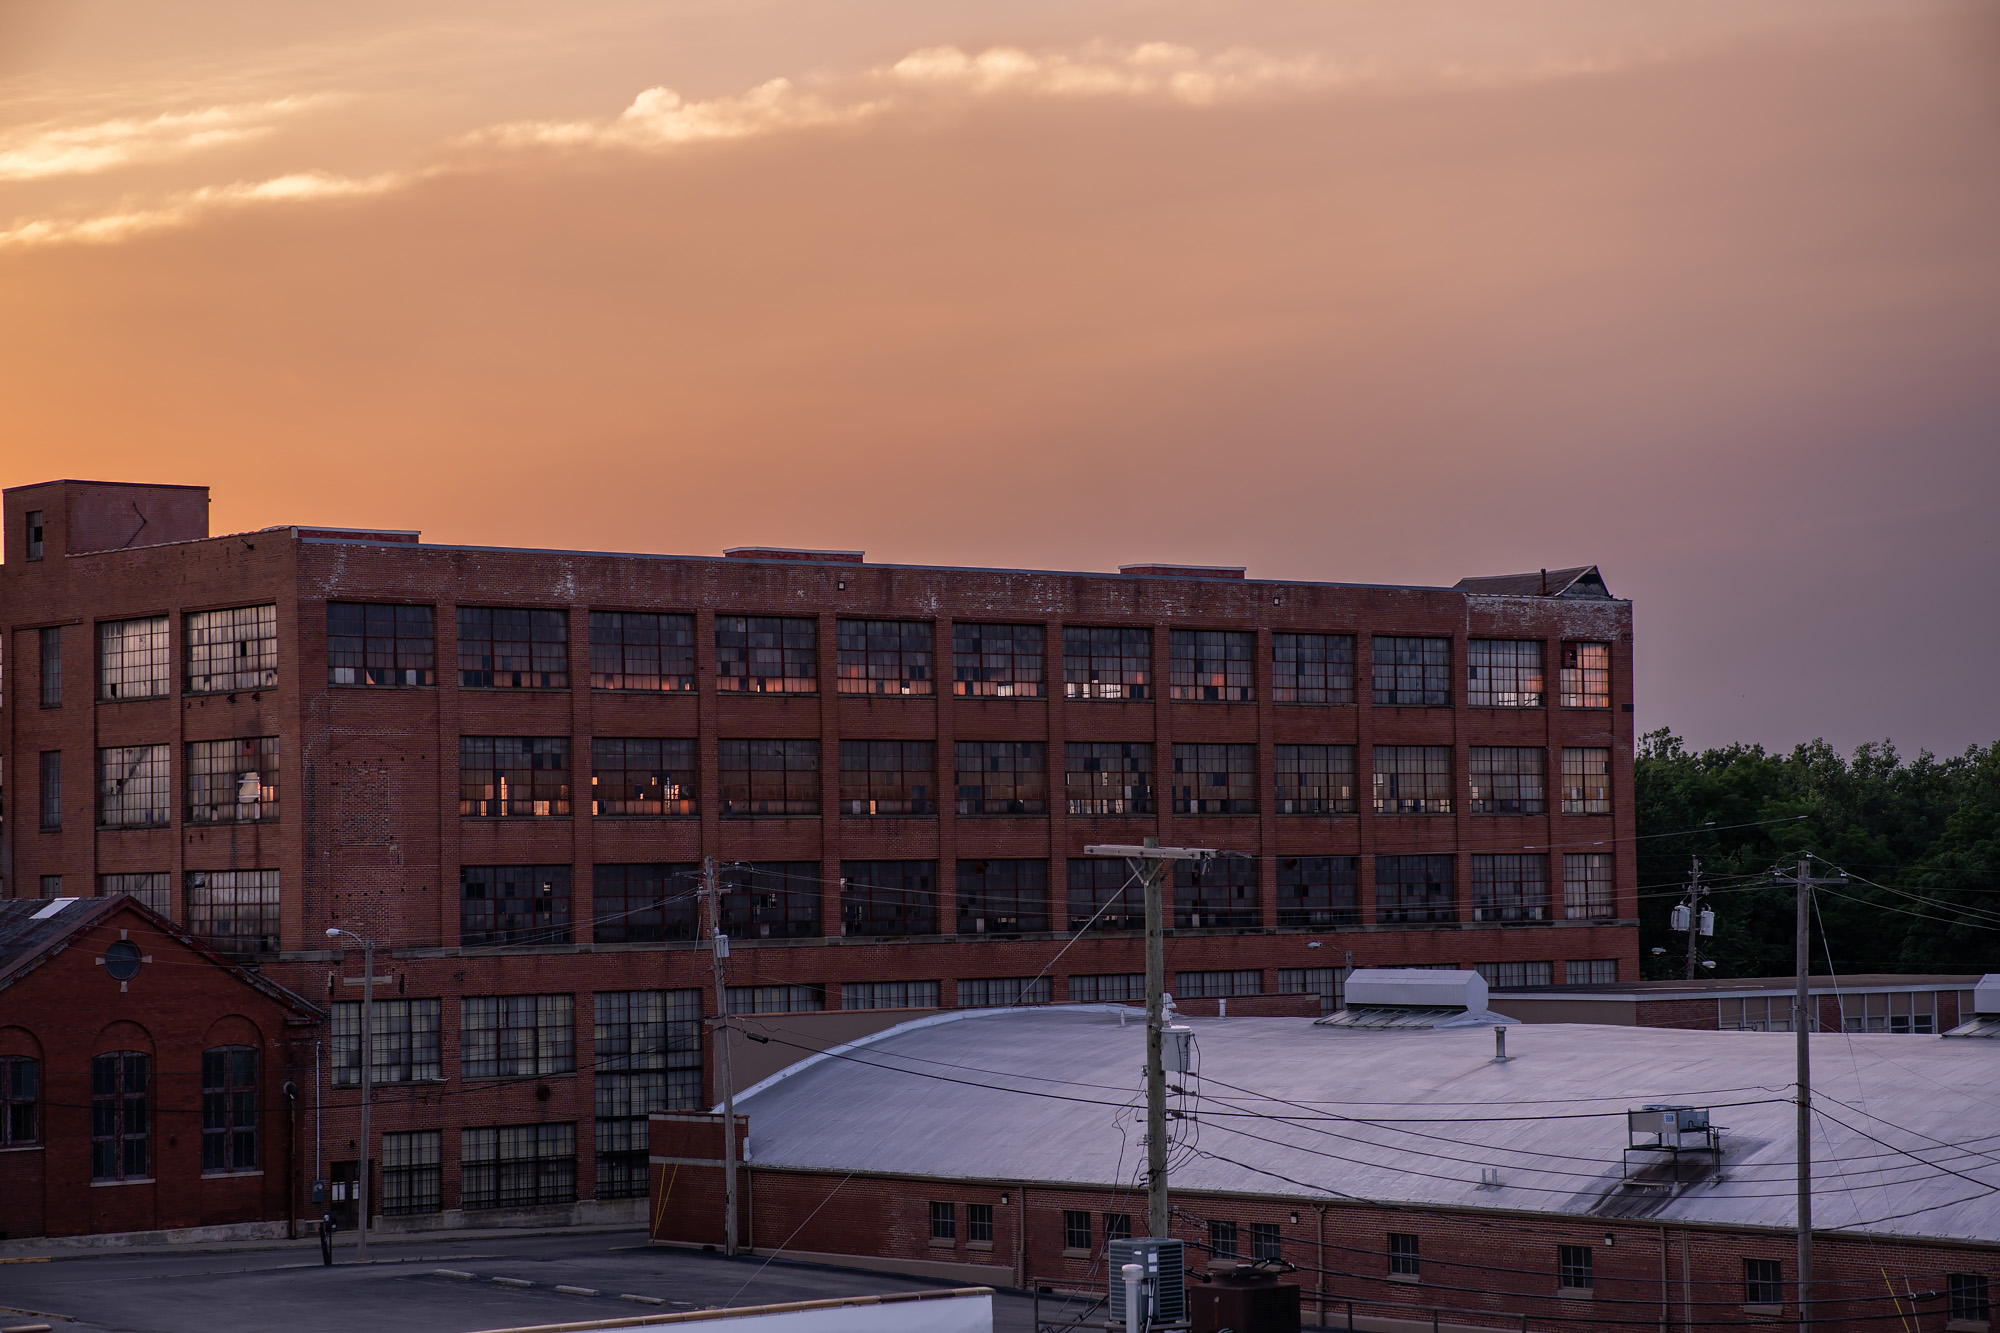 Old industrial Springfield Ohio